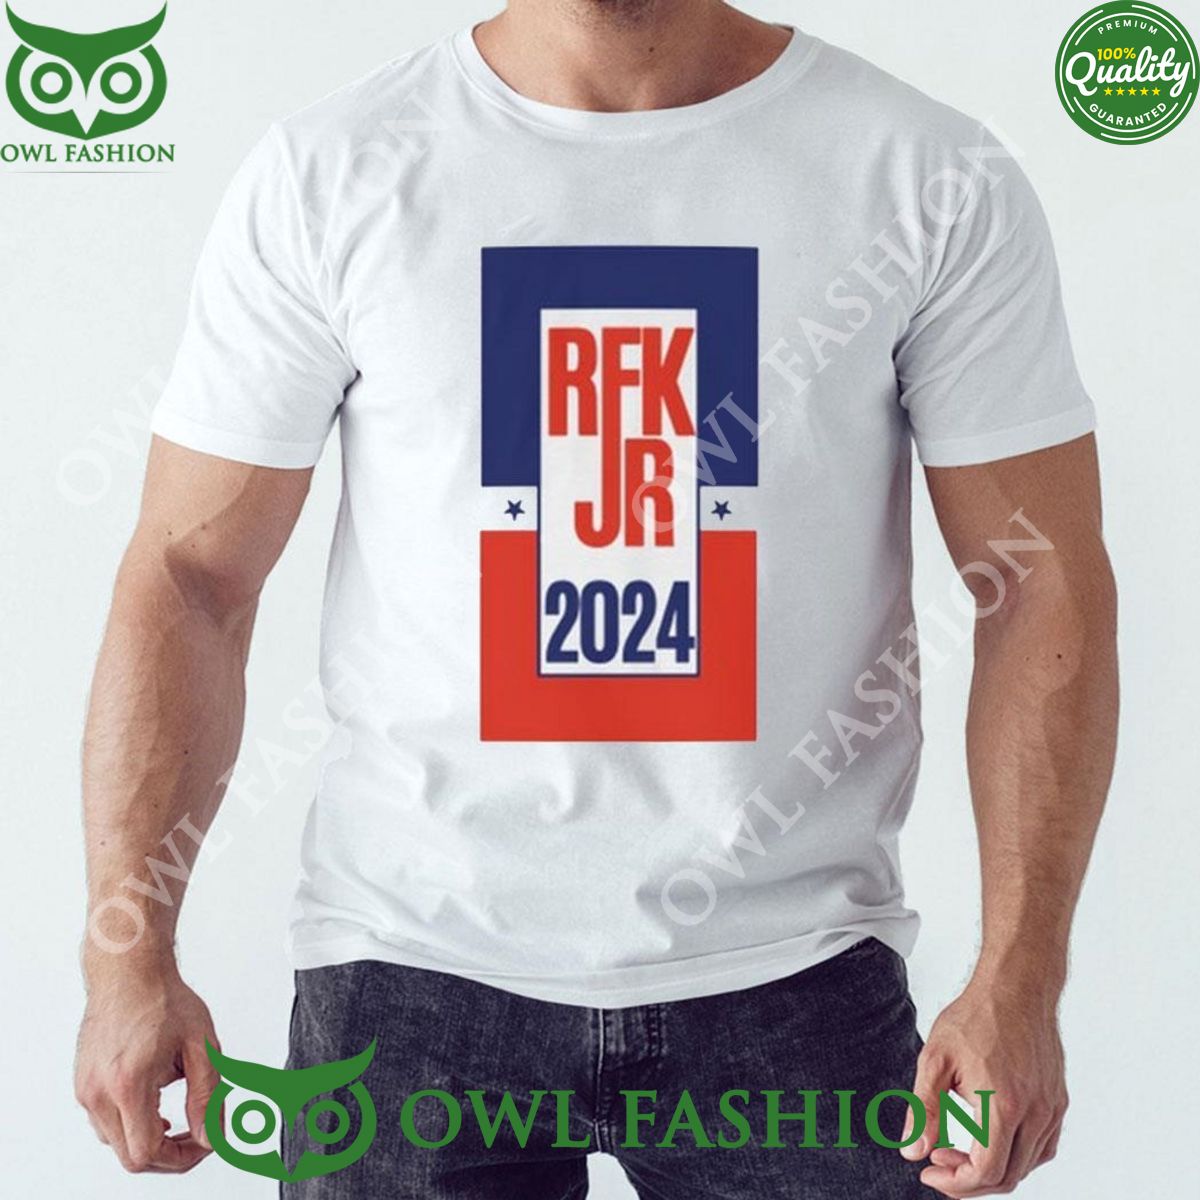 rfk jr 2024 shirt t shirt 1 khfzq.jpg